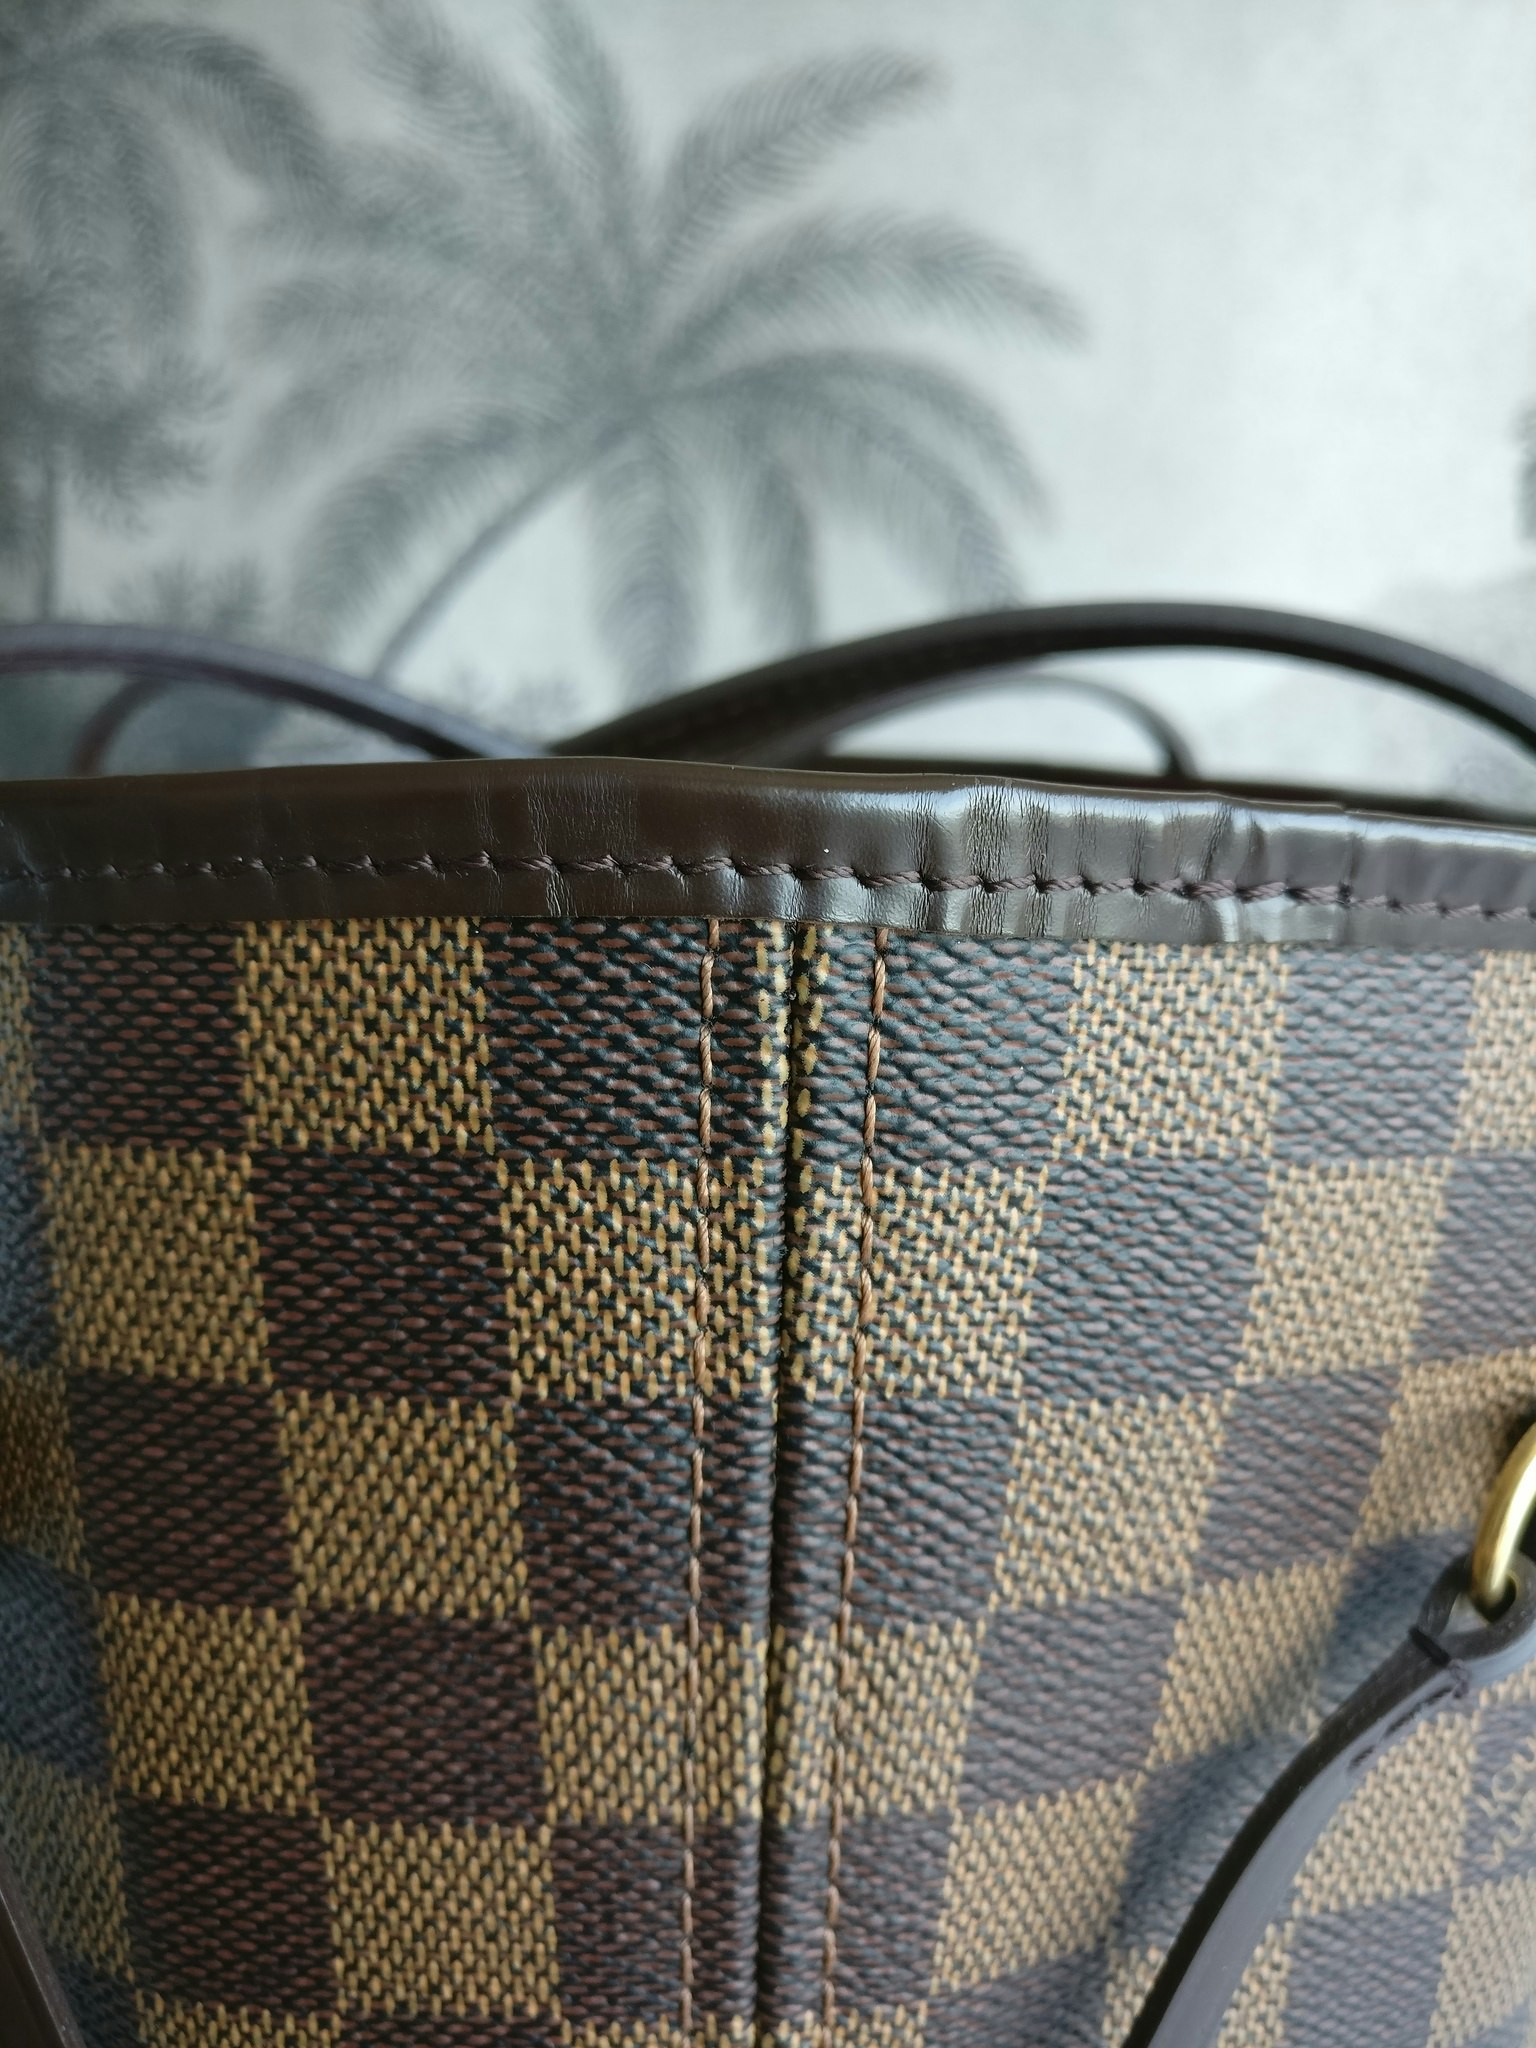 Louis Vuitton Neverfull MM - Good or Bag